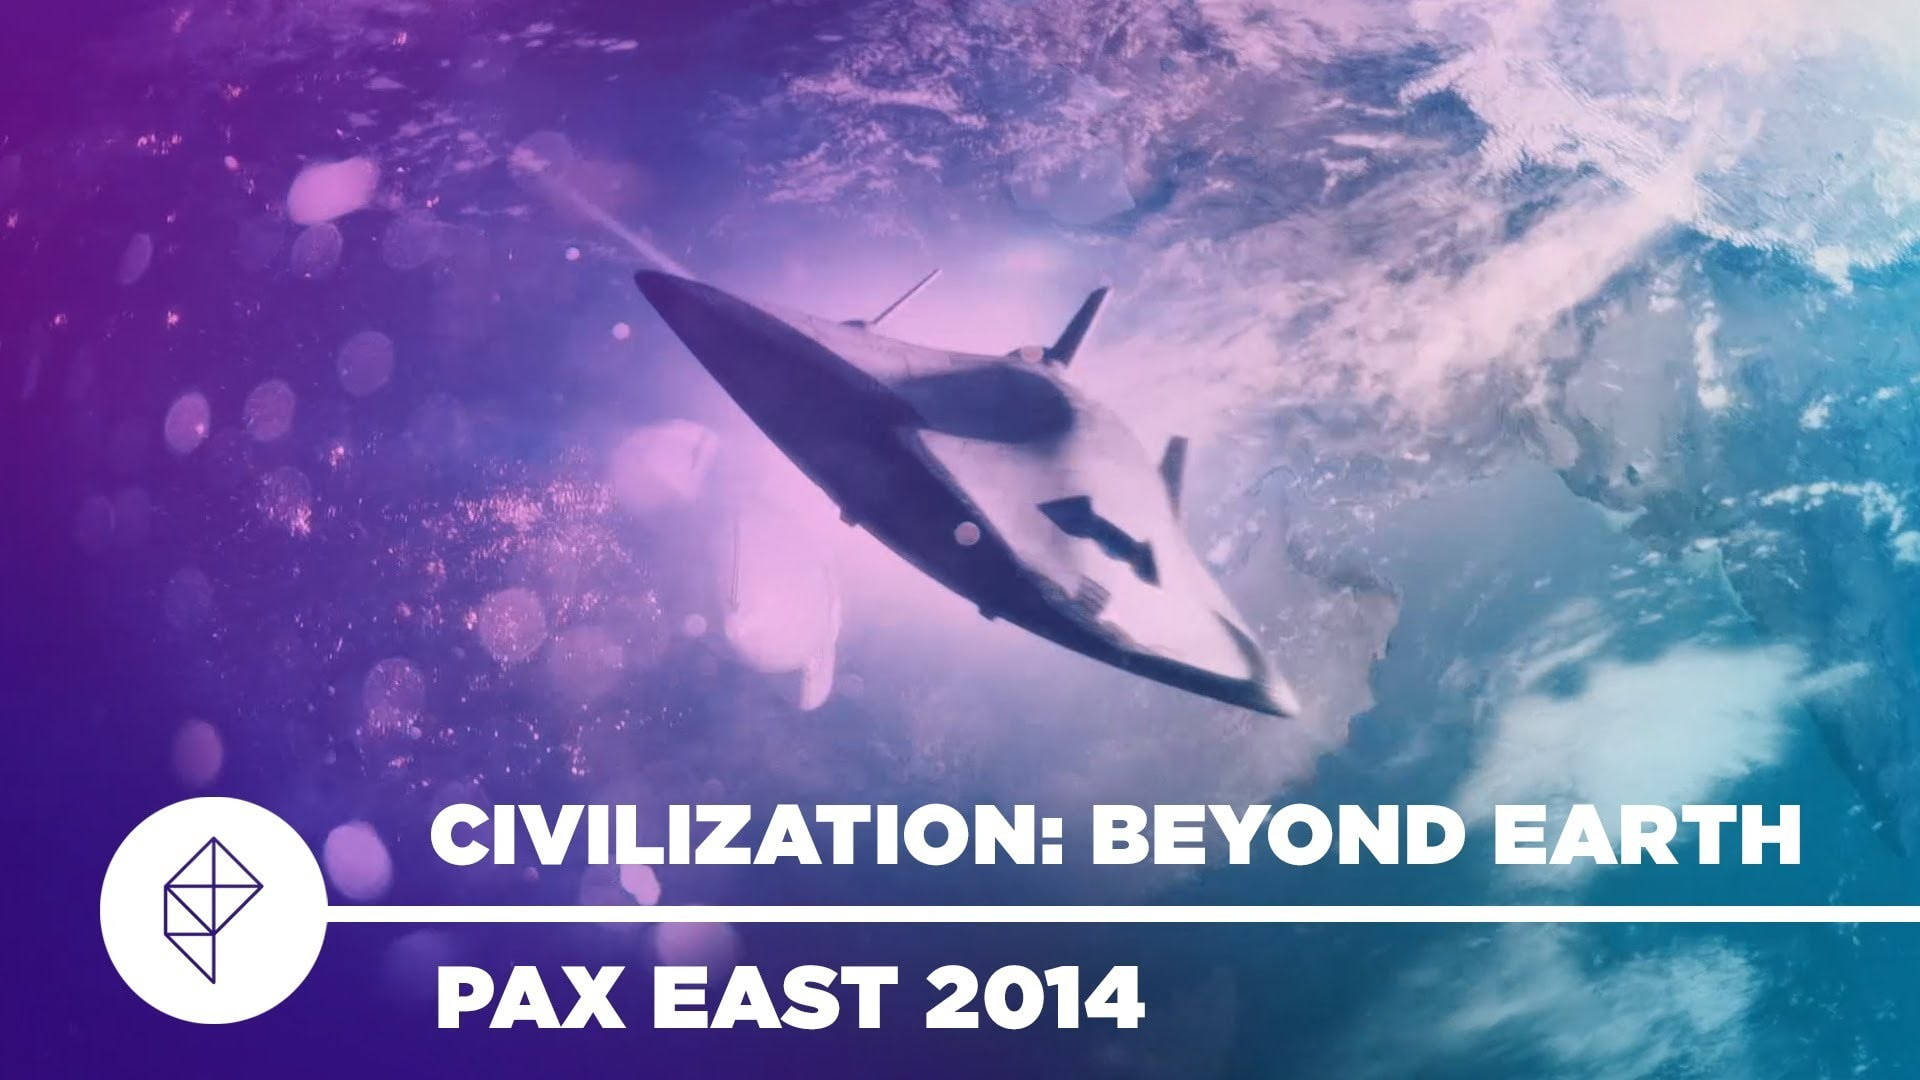 White Spaceship Civilization Beyond Earth Background